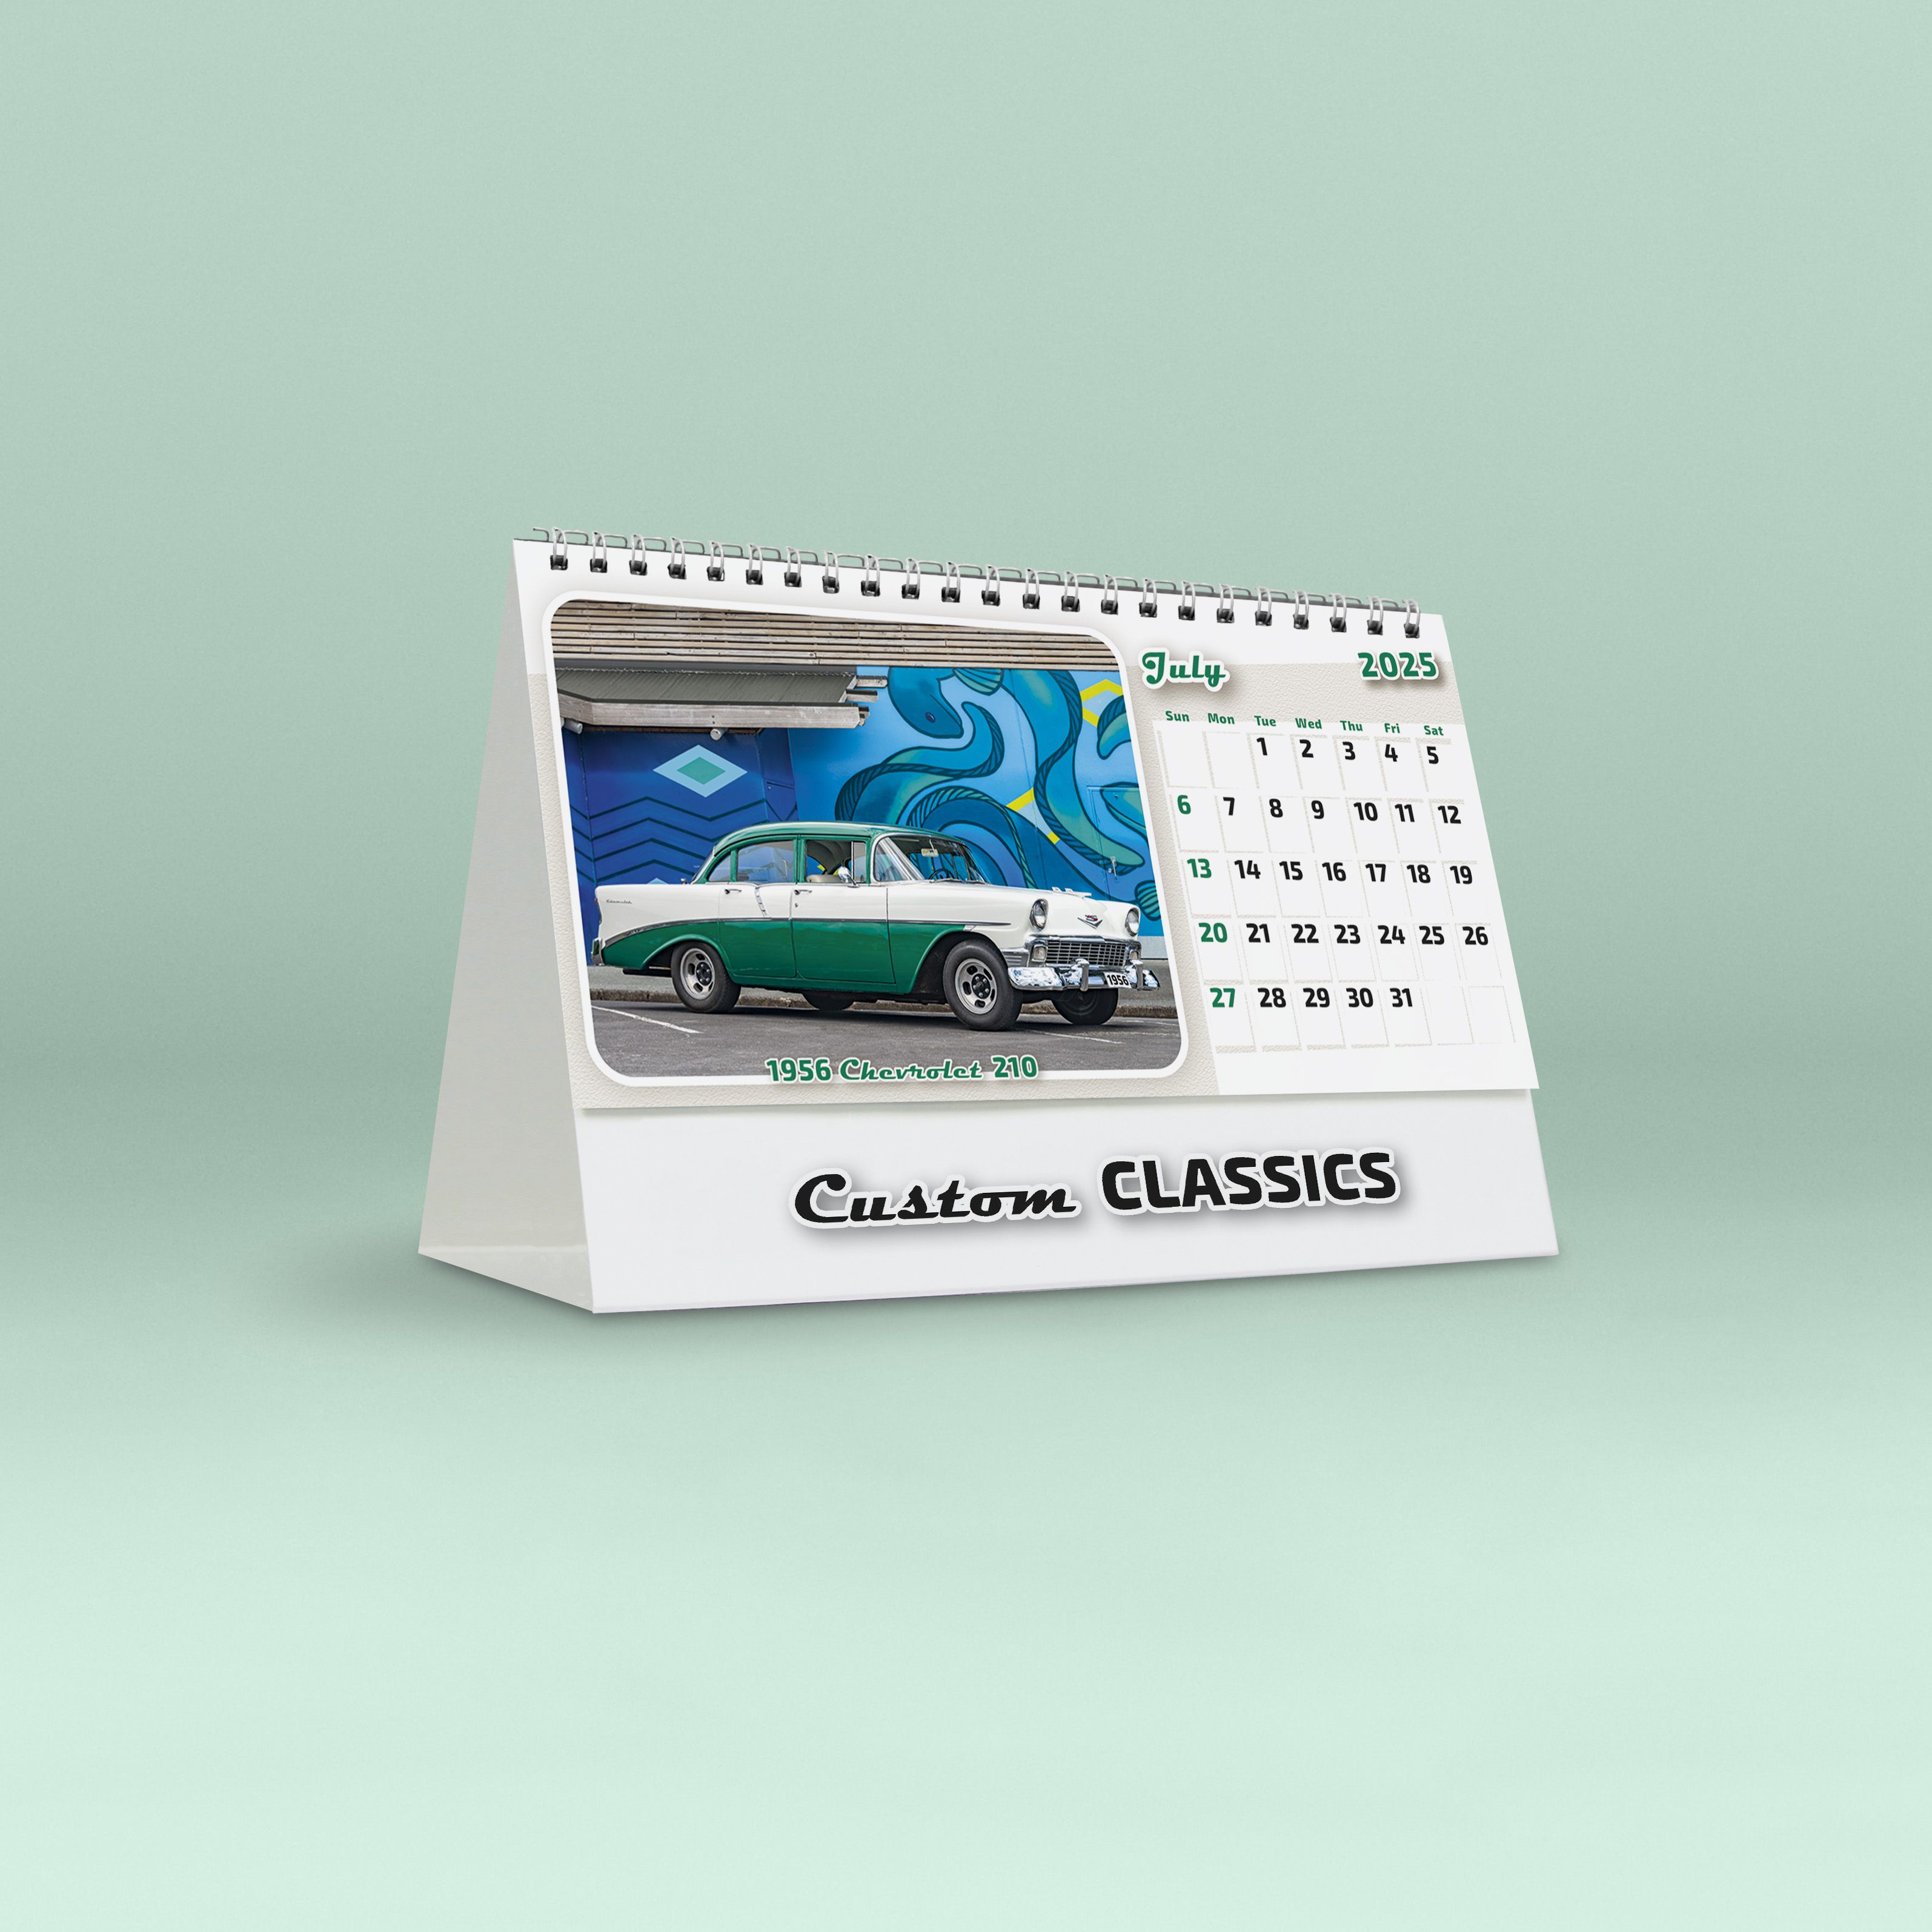 Custom Classics Desk_4208_25_14